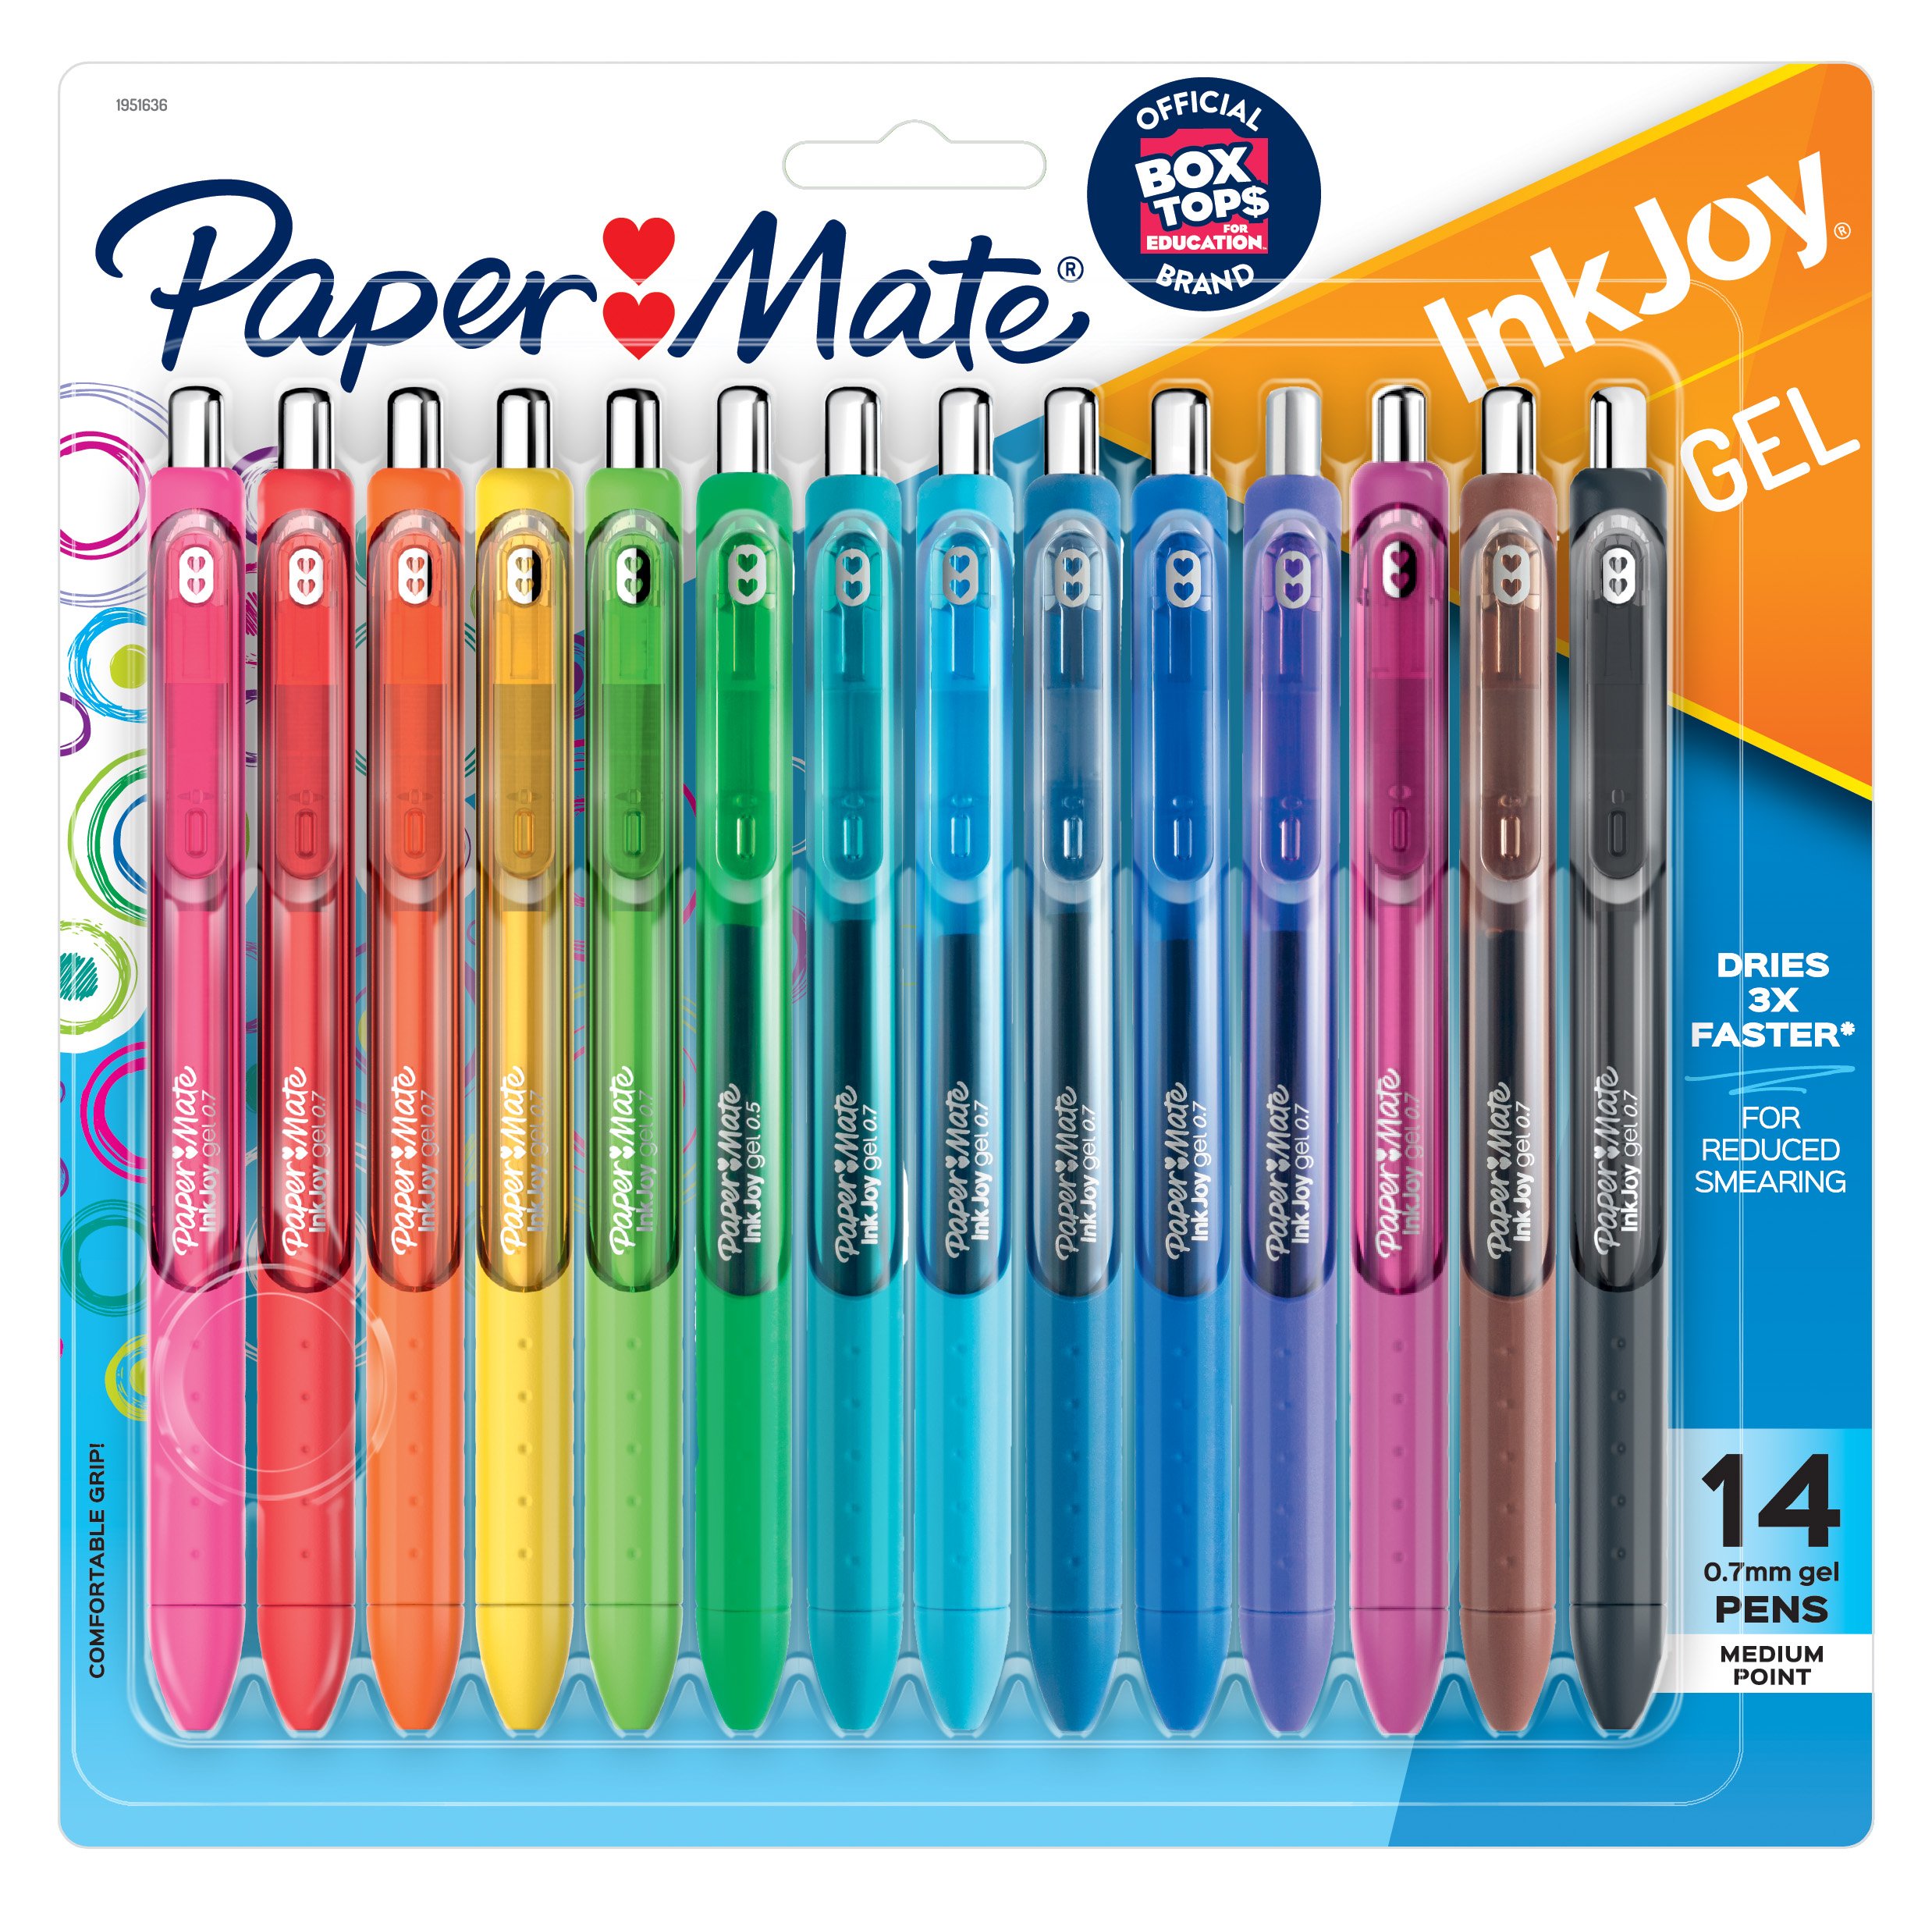 Paper Mate InkJoy Pens, Gel, Medium Point, 0.7 mm - 6 pens